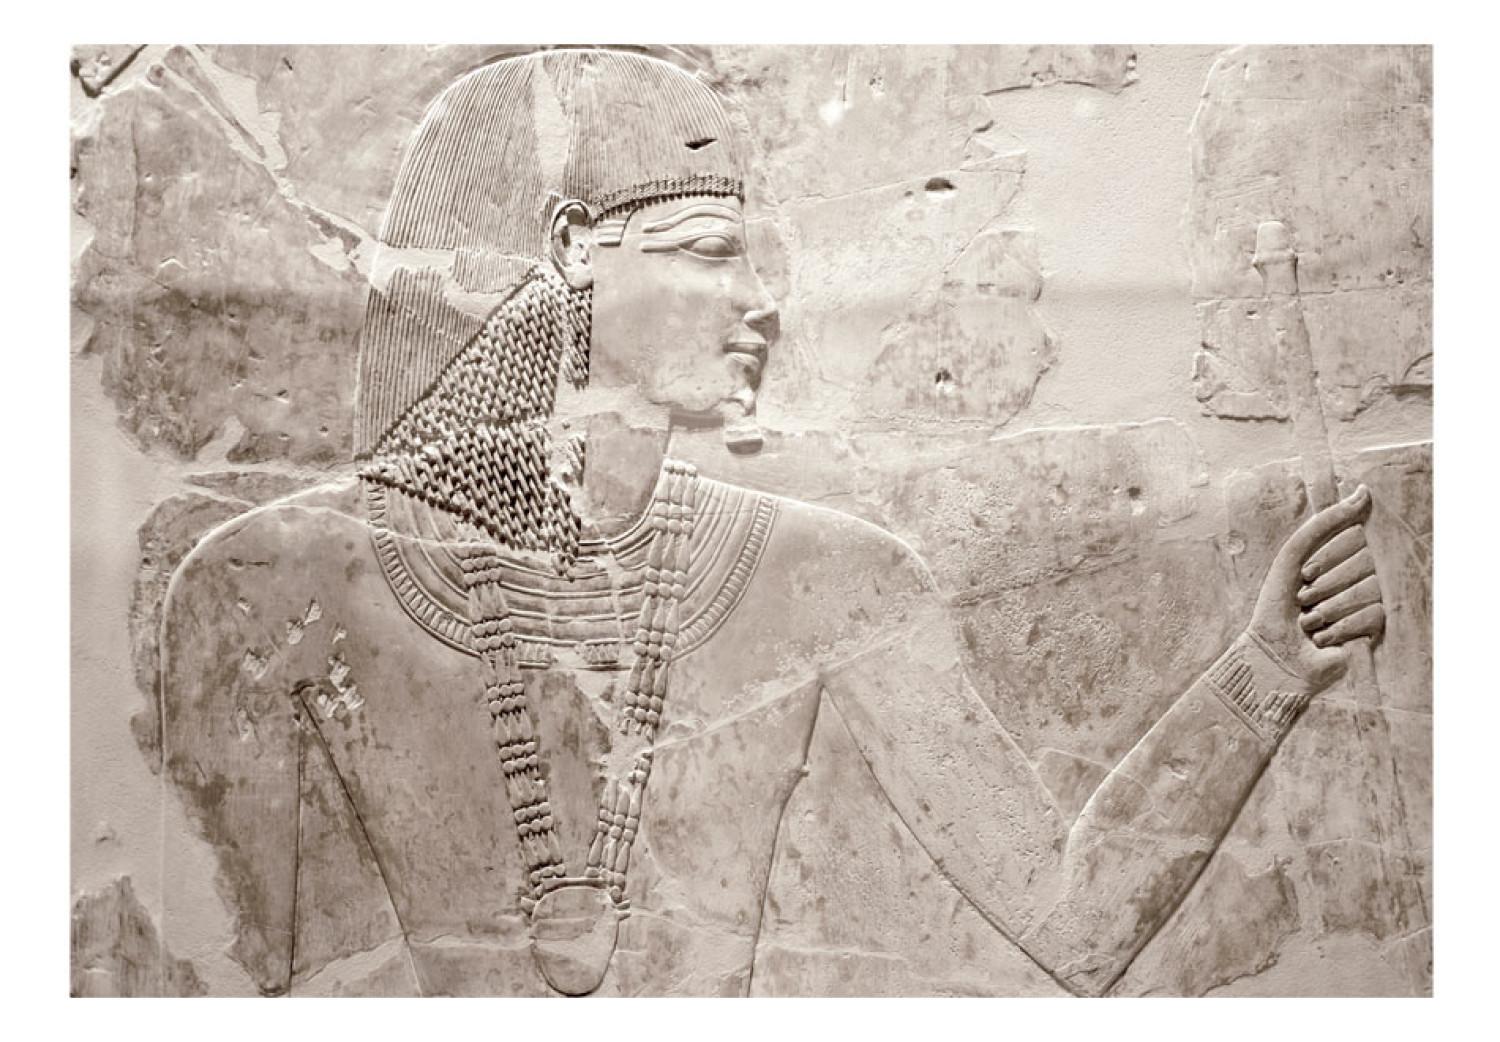 Fotomural a medida Faraón de piedra - gran escultura africana de color beige